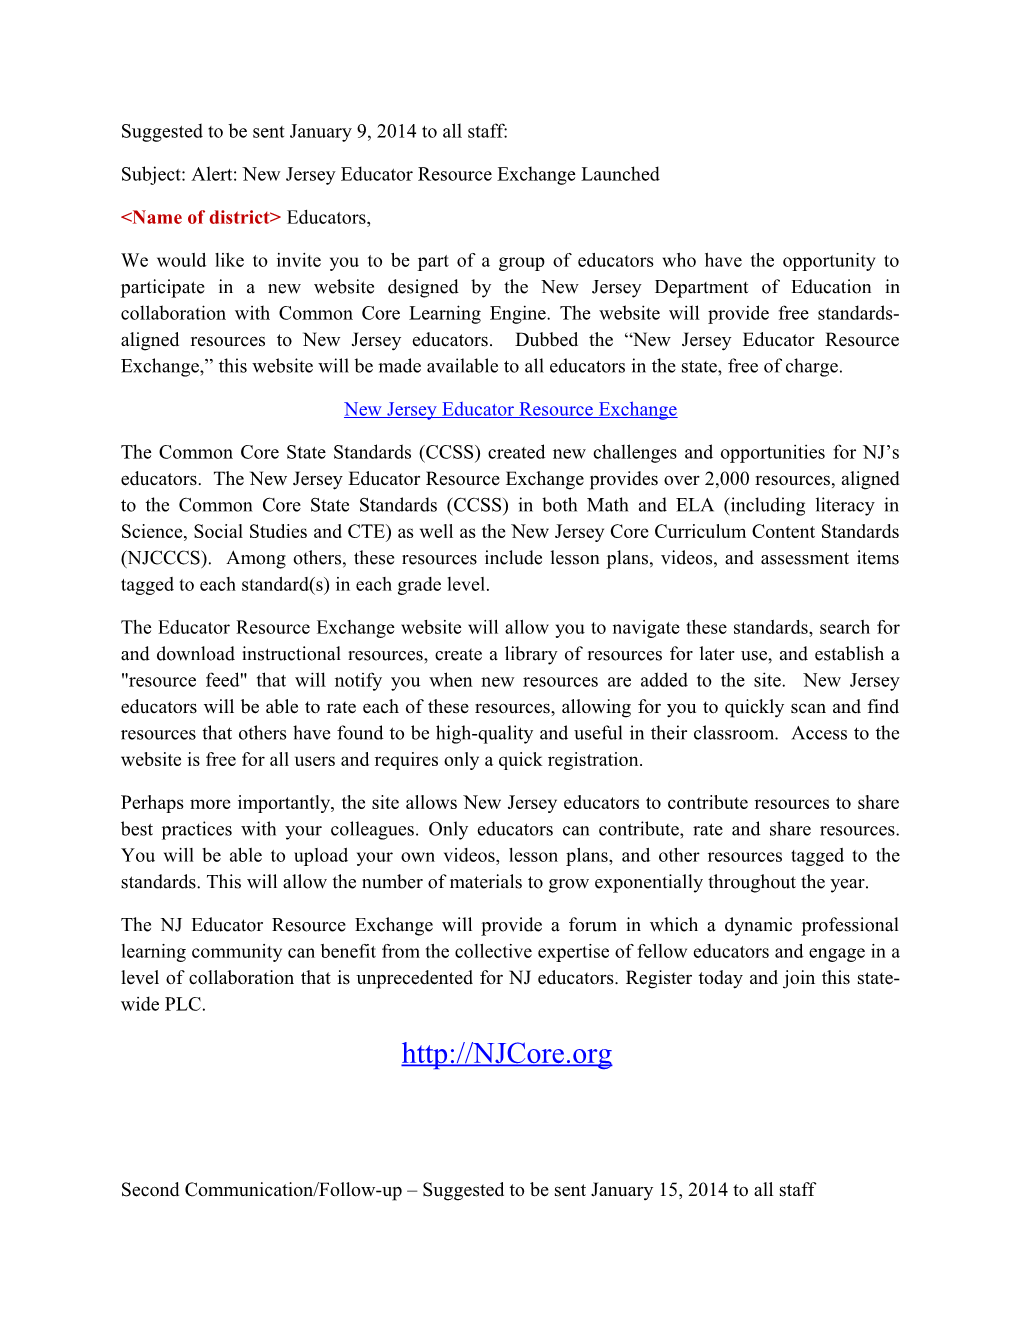 Subject: Alert: New Jersey Educator Resource Exchange Launched